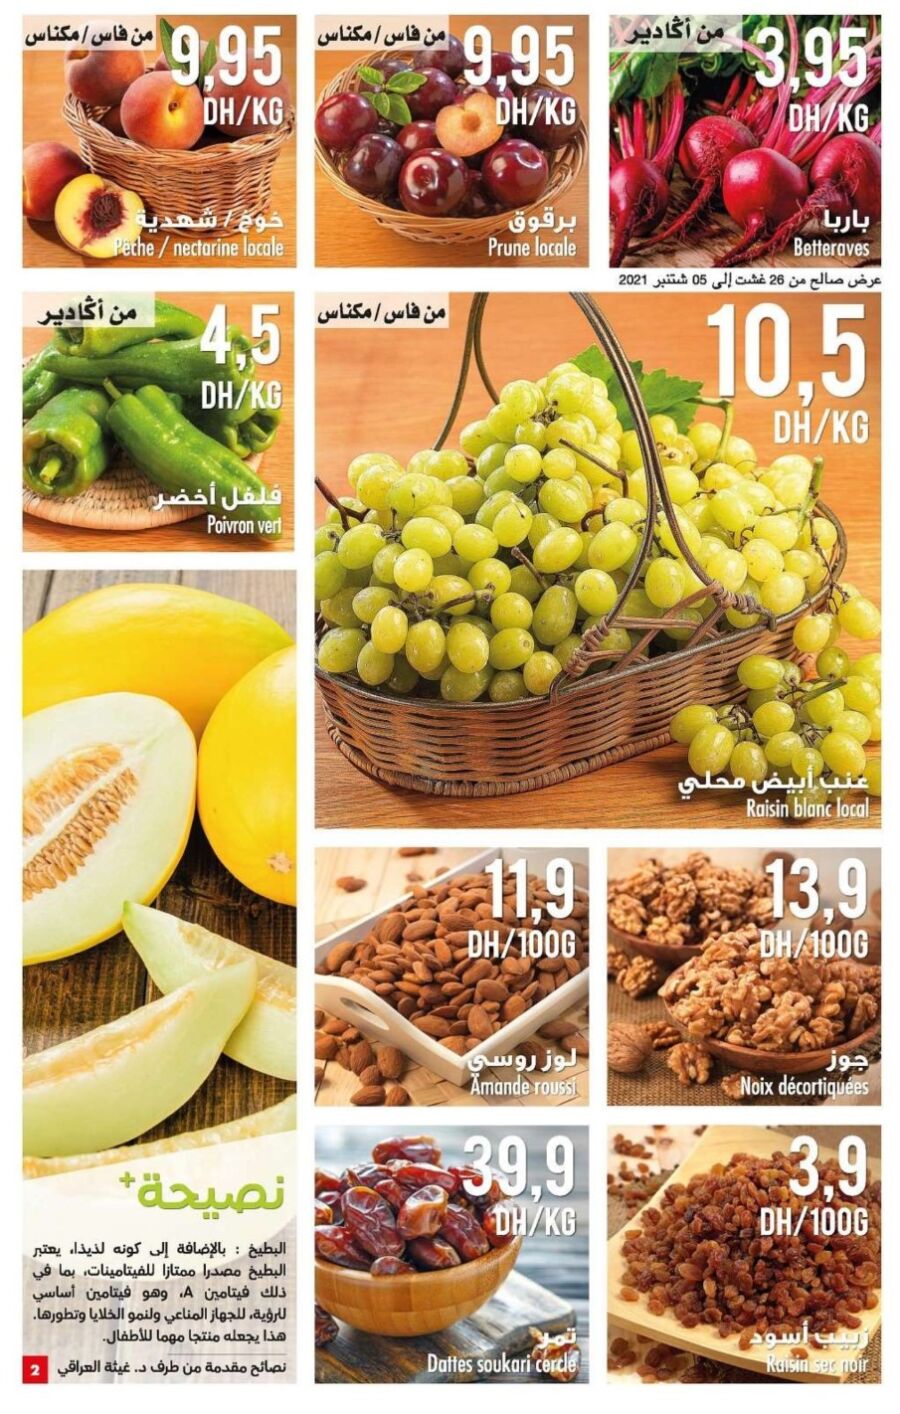 Catalogue Carrefour Market Maroc دخول مدرسي بصحة ونشاط du 26 août au 15 septembre 2021